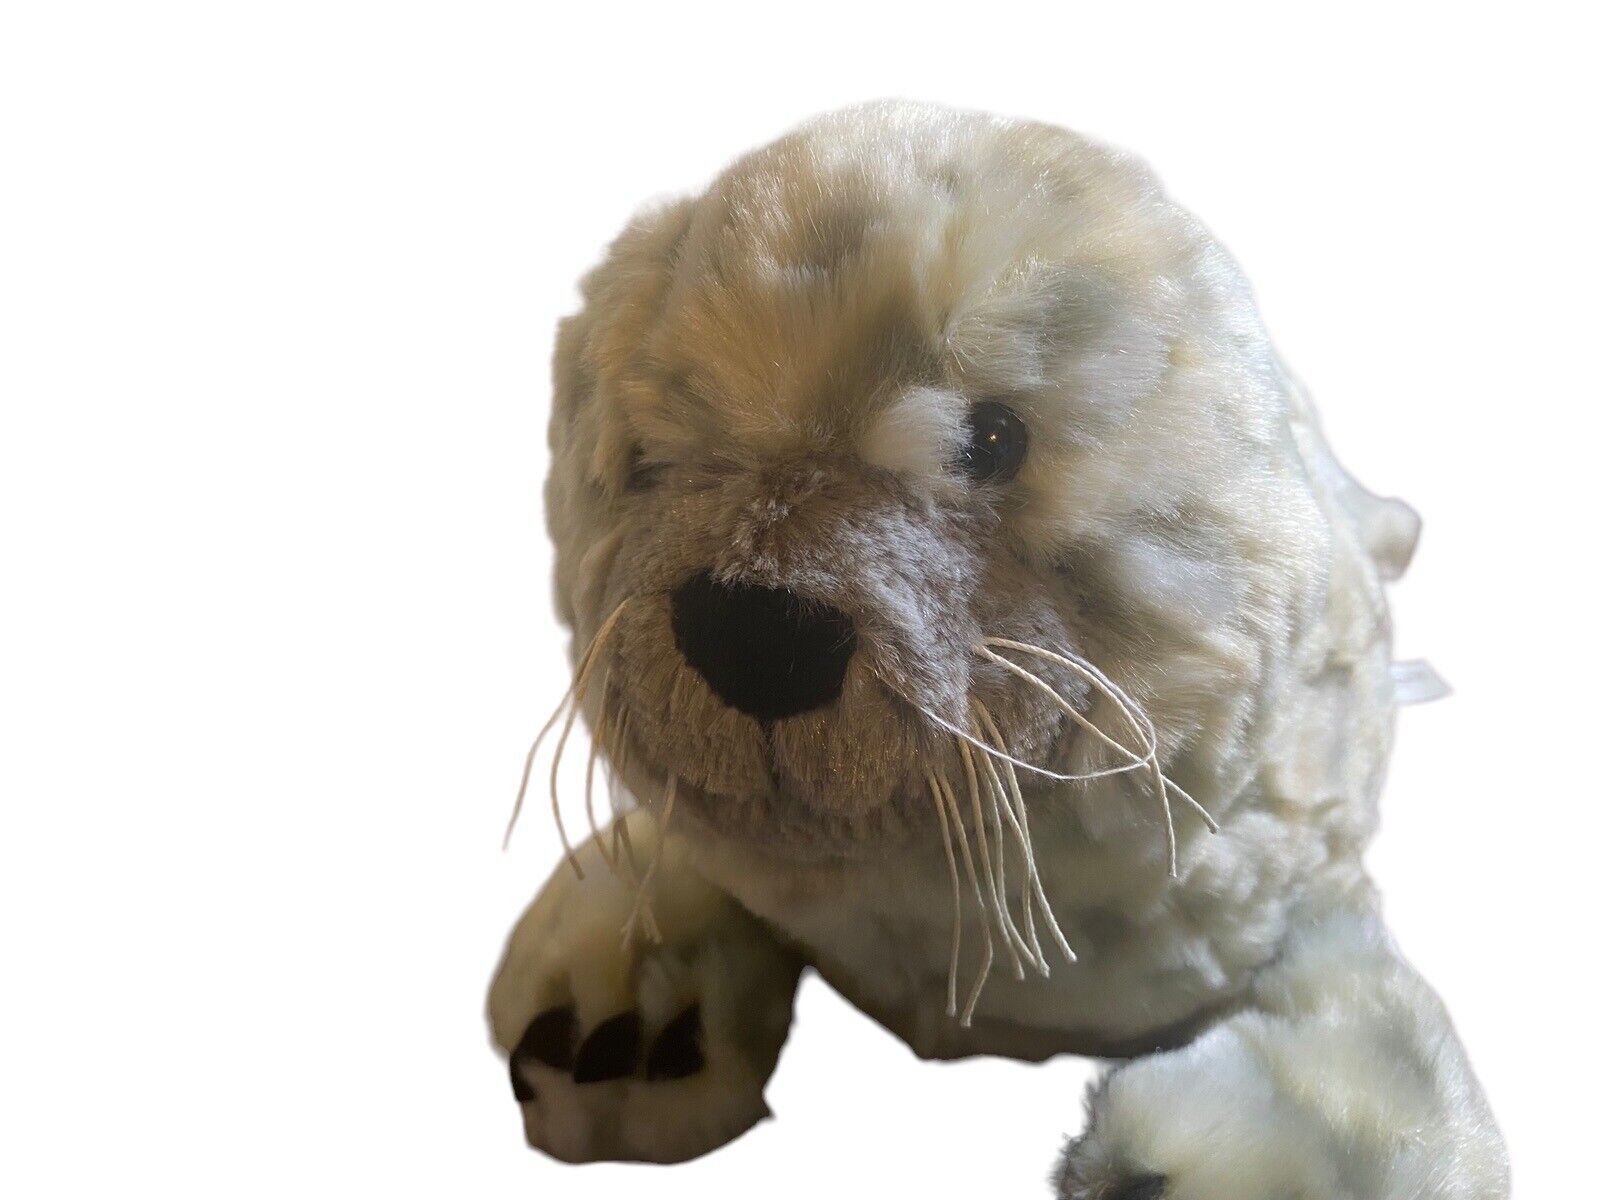 Animal Adventure Spotted Leopard Seal Plush Soft Toy Stuffed Animal 2019 